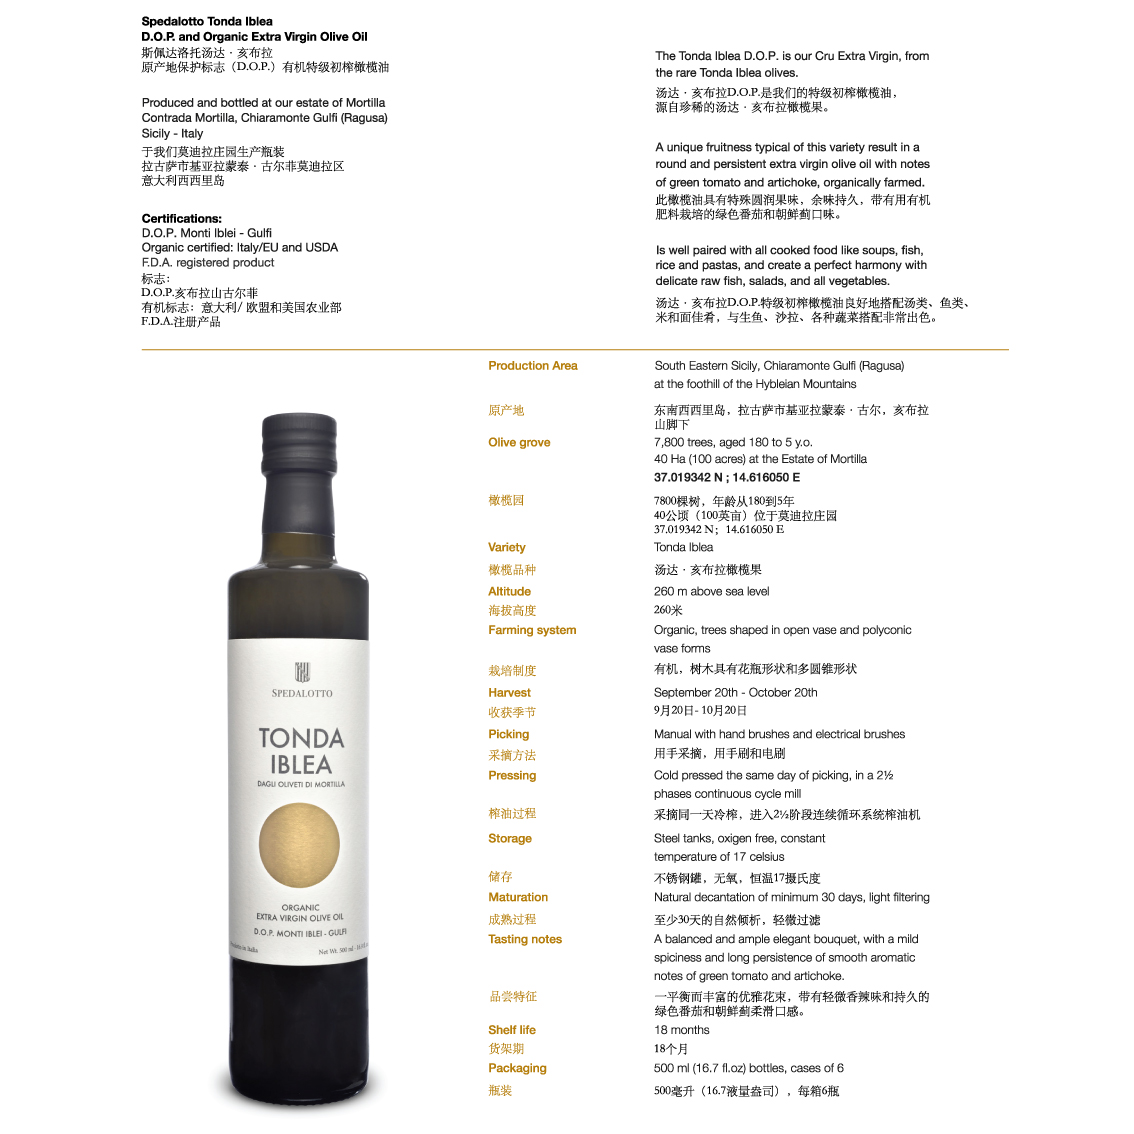 Spedalotto Tonda Iblea: Organic Extra Virgin Olive Oil, condiments, additives